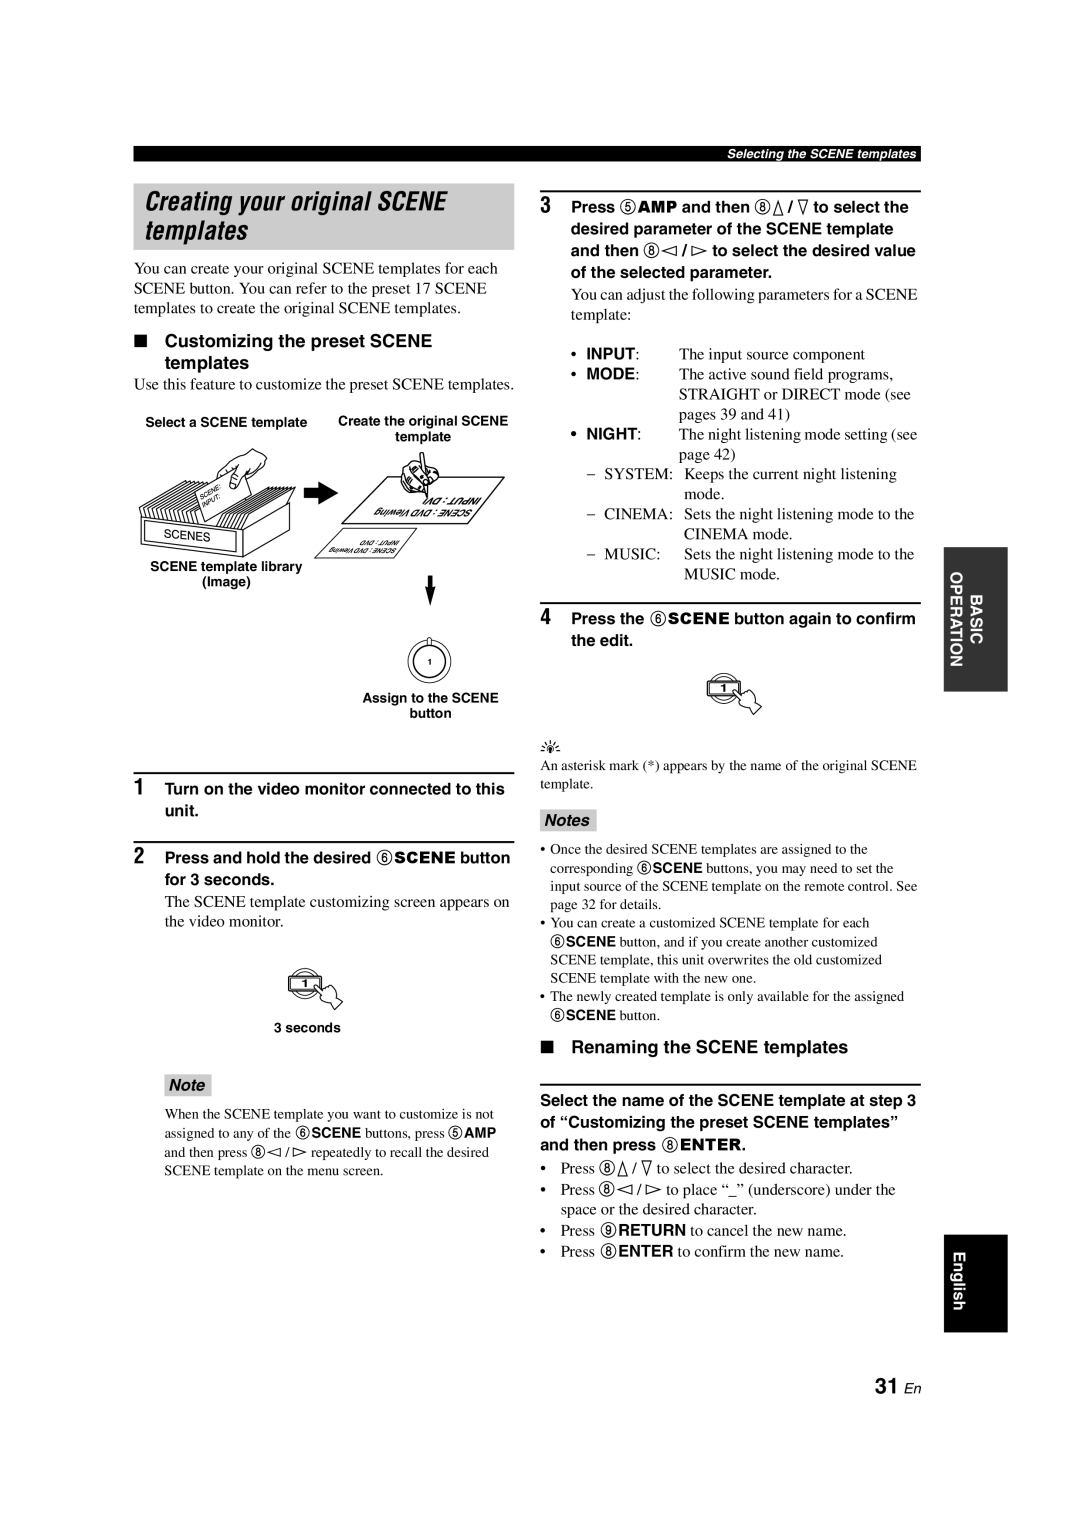 Yamaha RX-V463 owner manual Creating your original SCENE templates, 31 En, Customizing the preset SCENE templates, Notes 